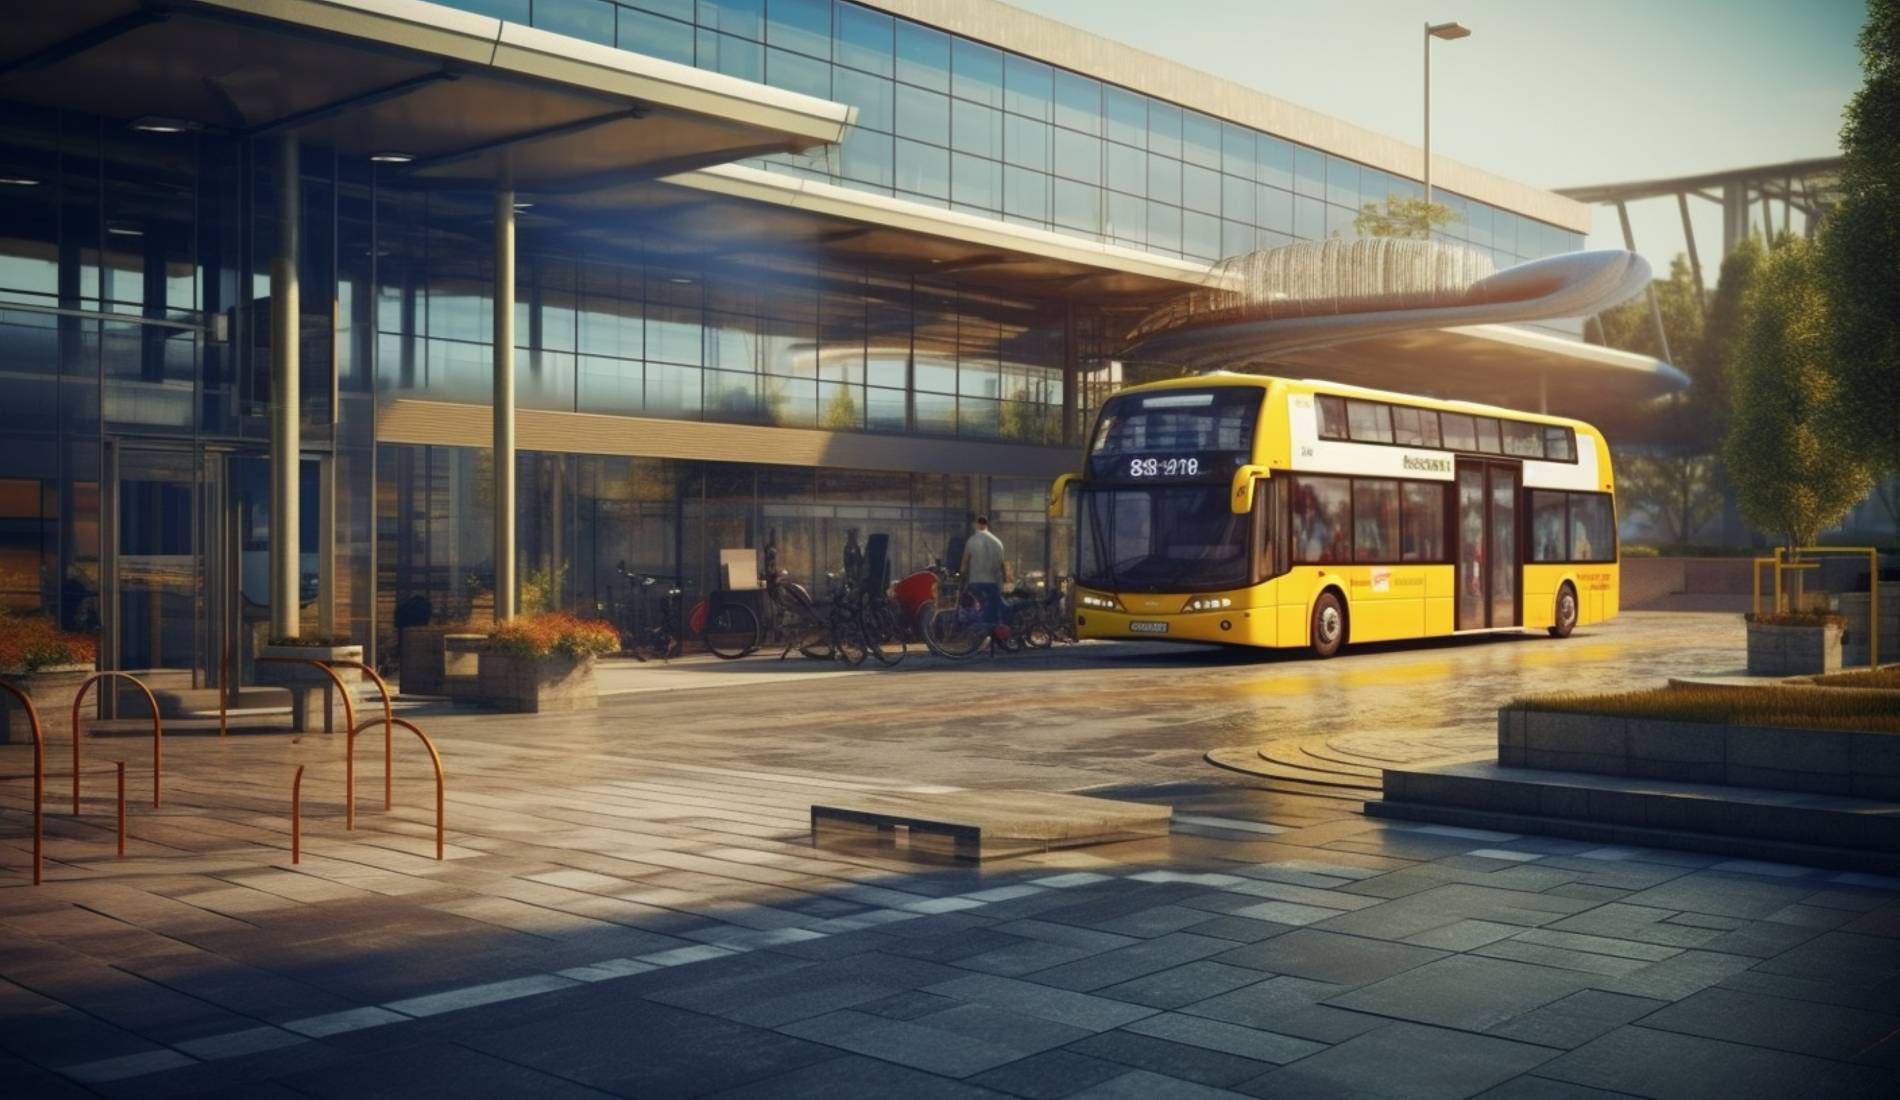 vecteezy_station-buses-illustration-background_26727044